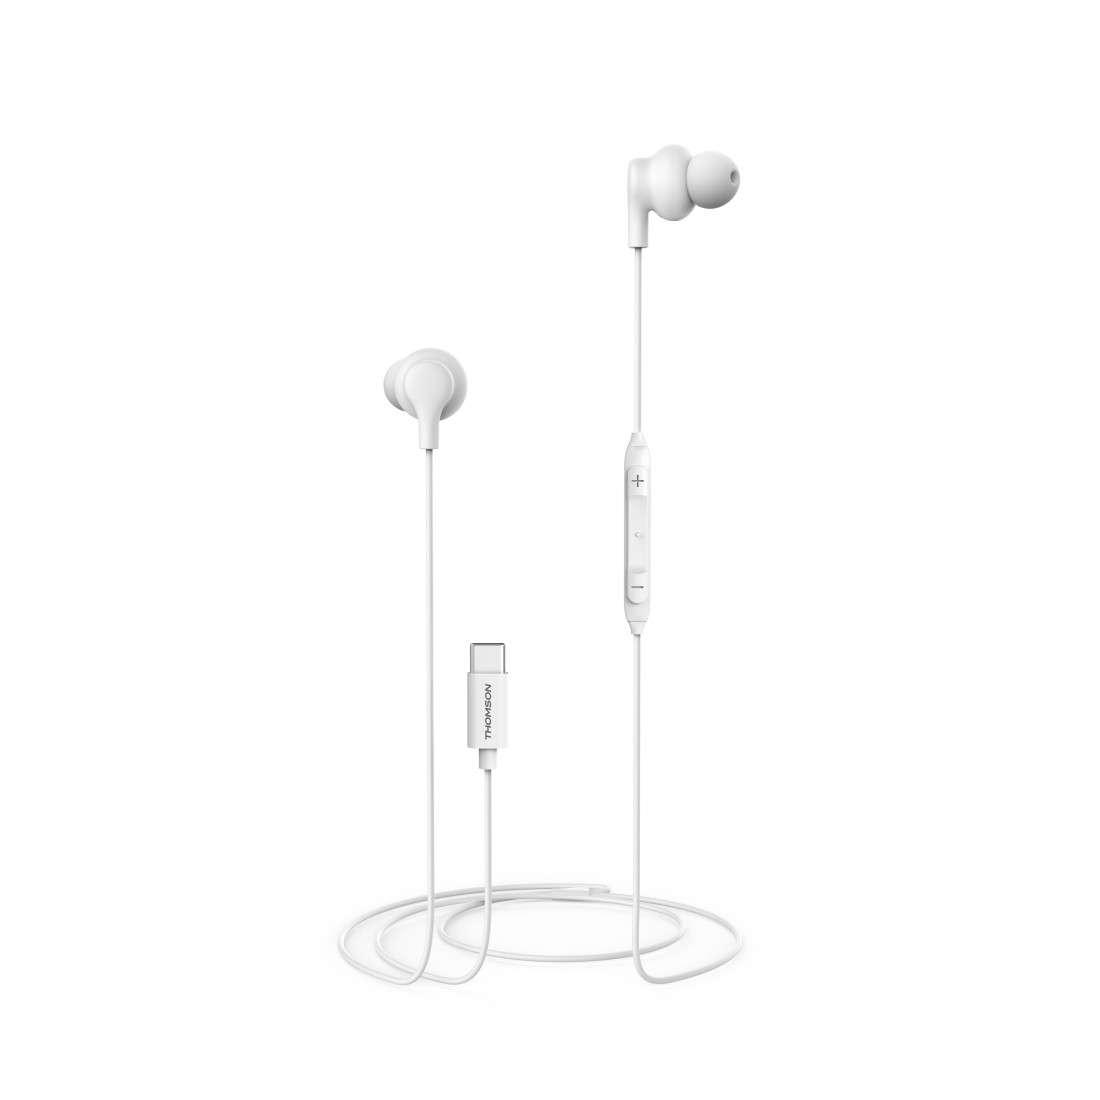 THOMSON (LIZENZMARKE) Kopfhörer, In-Ear, Mikrofon, Kabelknickschutz, USB-C, Weiß